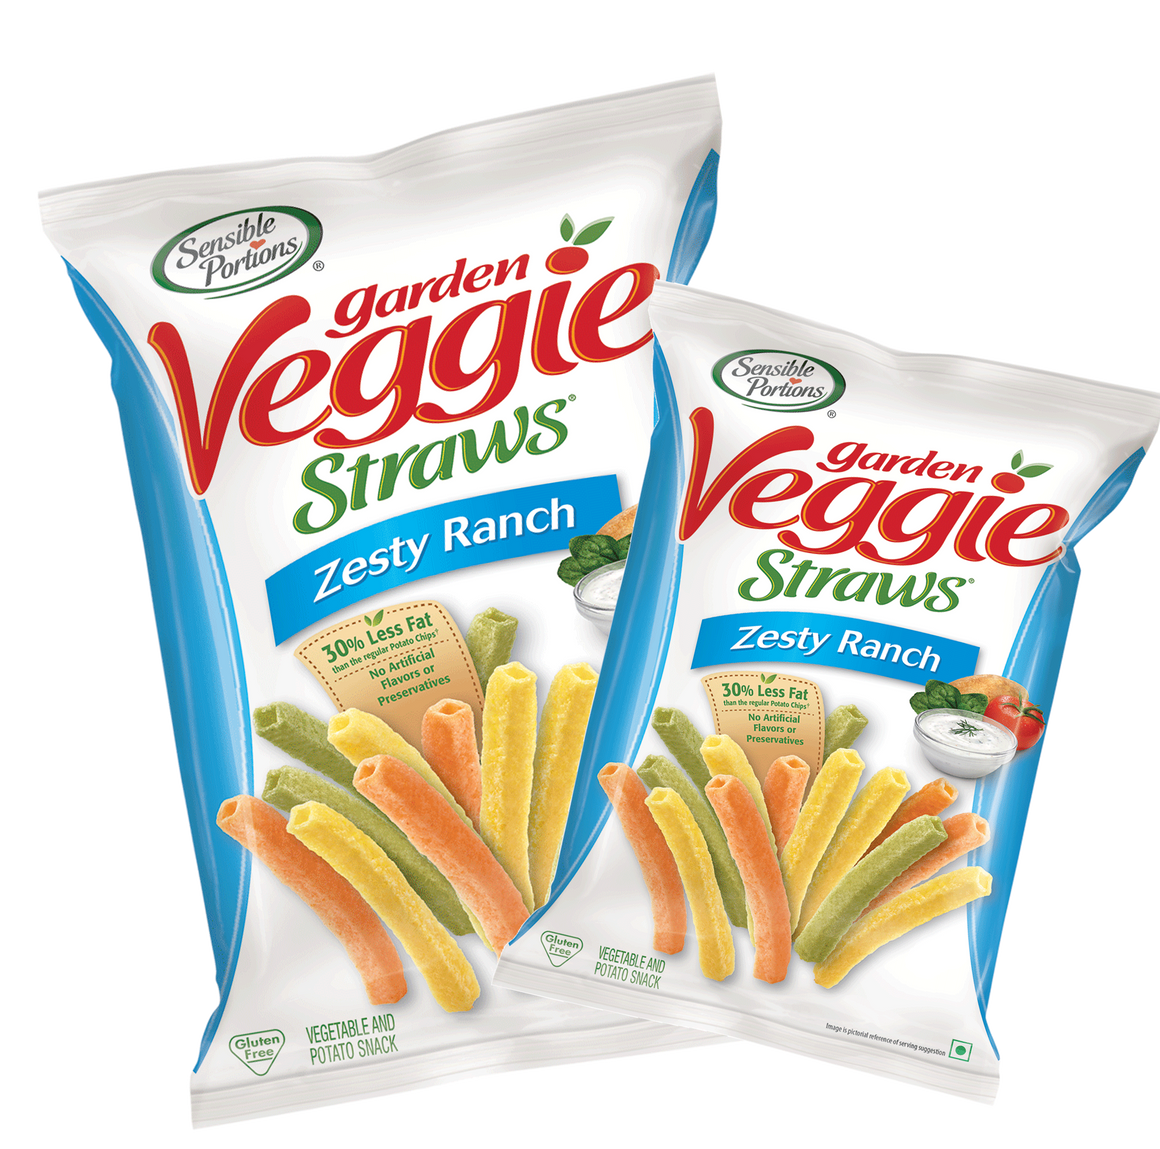 Sensible Portions Garden Veggie Straws Zesty Ranch 120g + 30gm Free - Promo